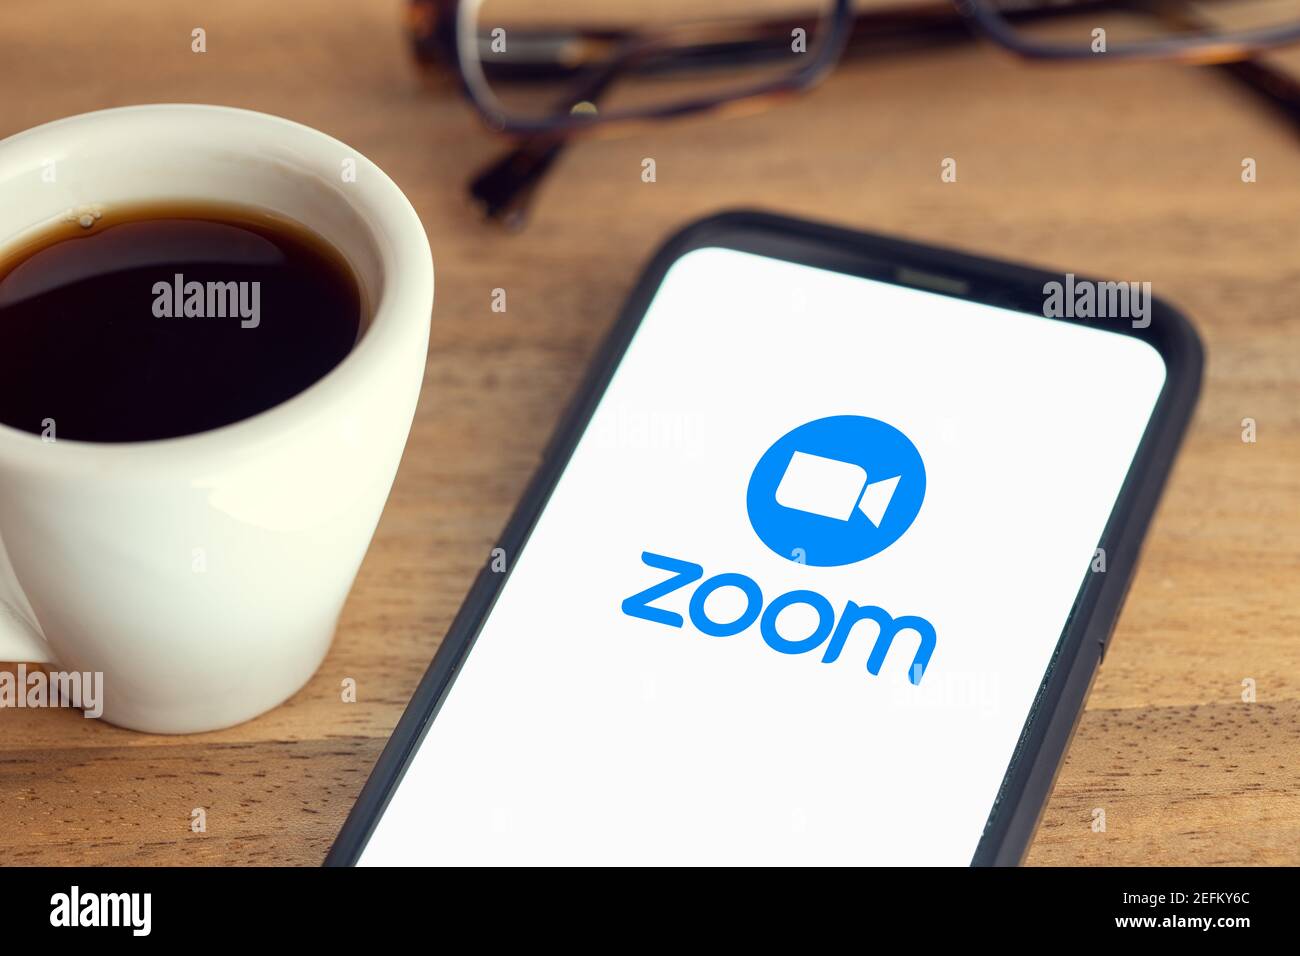 Galicia, España; 15 de febrero de 2021: Zoom logo en pantalla de teléfono inteligente sobre escritorio gafas y taza de café sobre mesa de madera Fotografía stock - Alamy